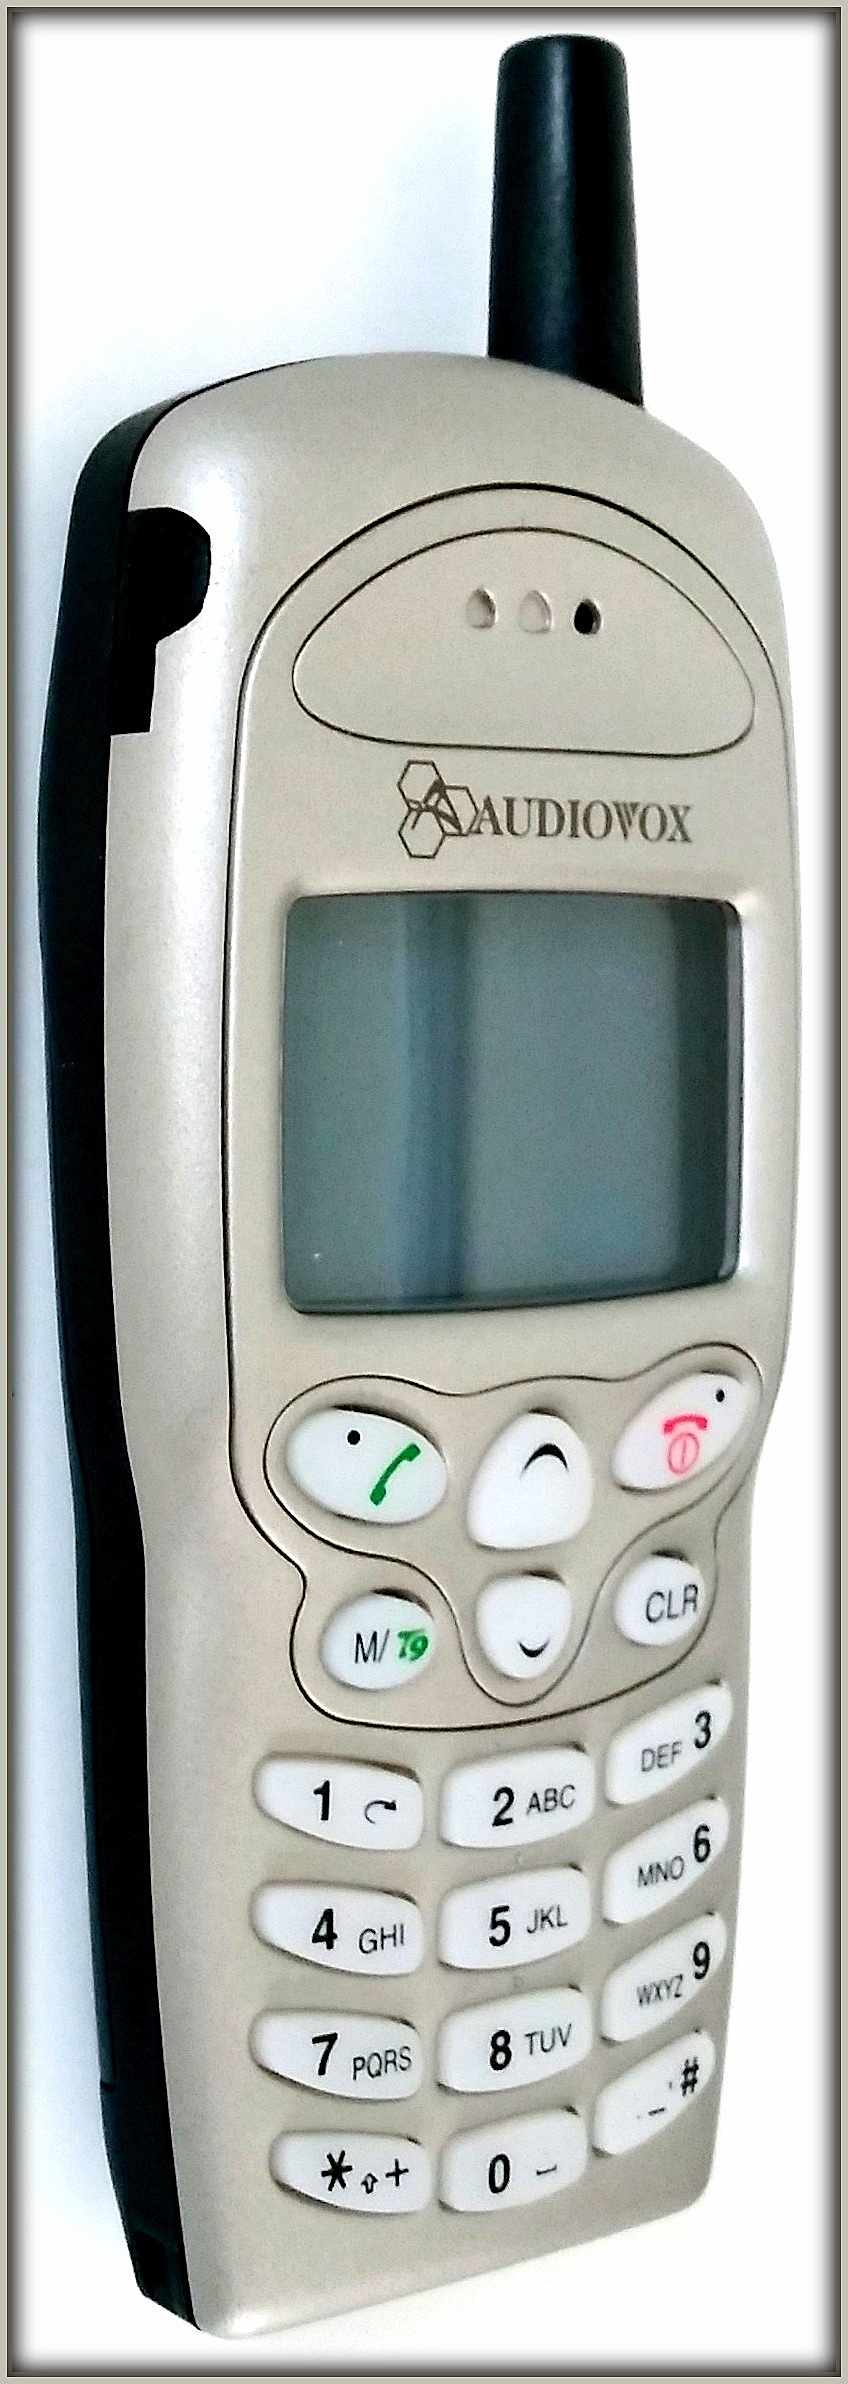 udiovox cell phone,audiovox new york,audiovox mobile phone,audiovox cell phone models